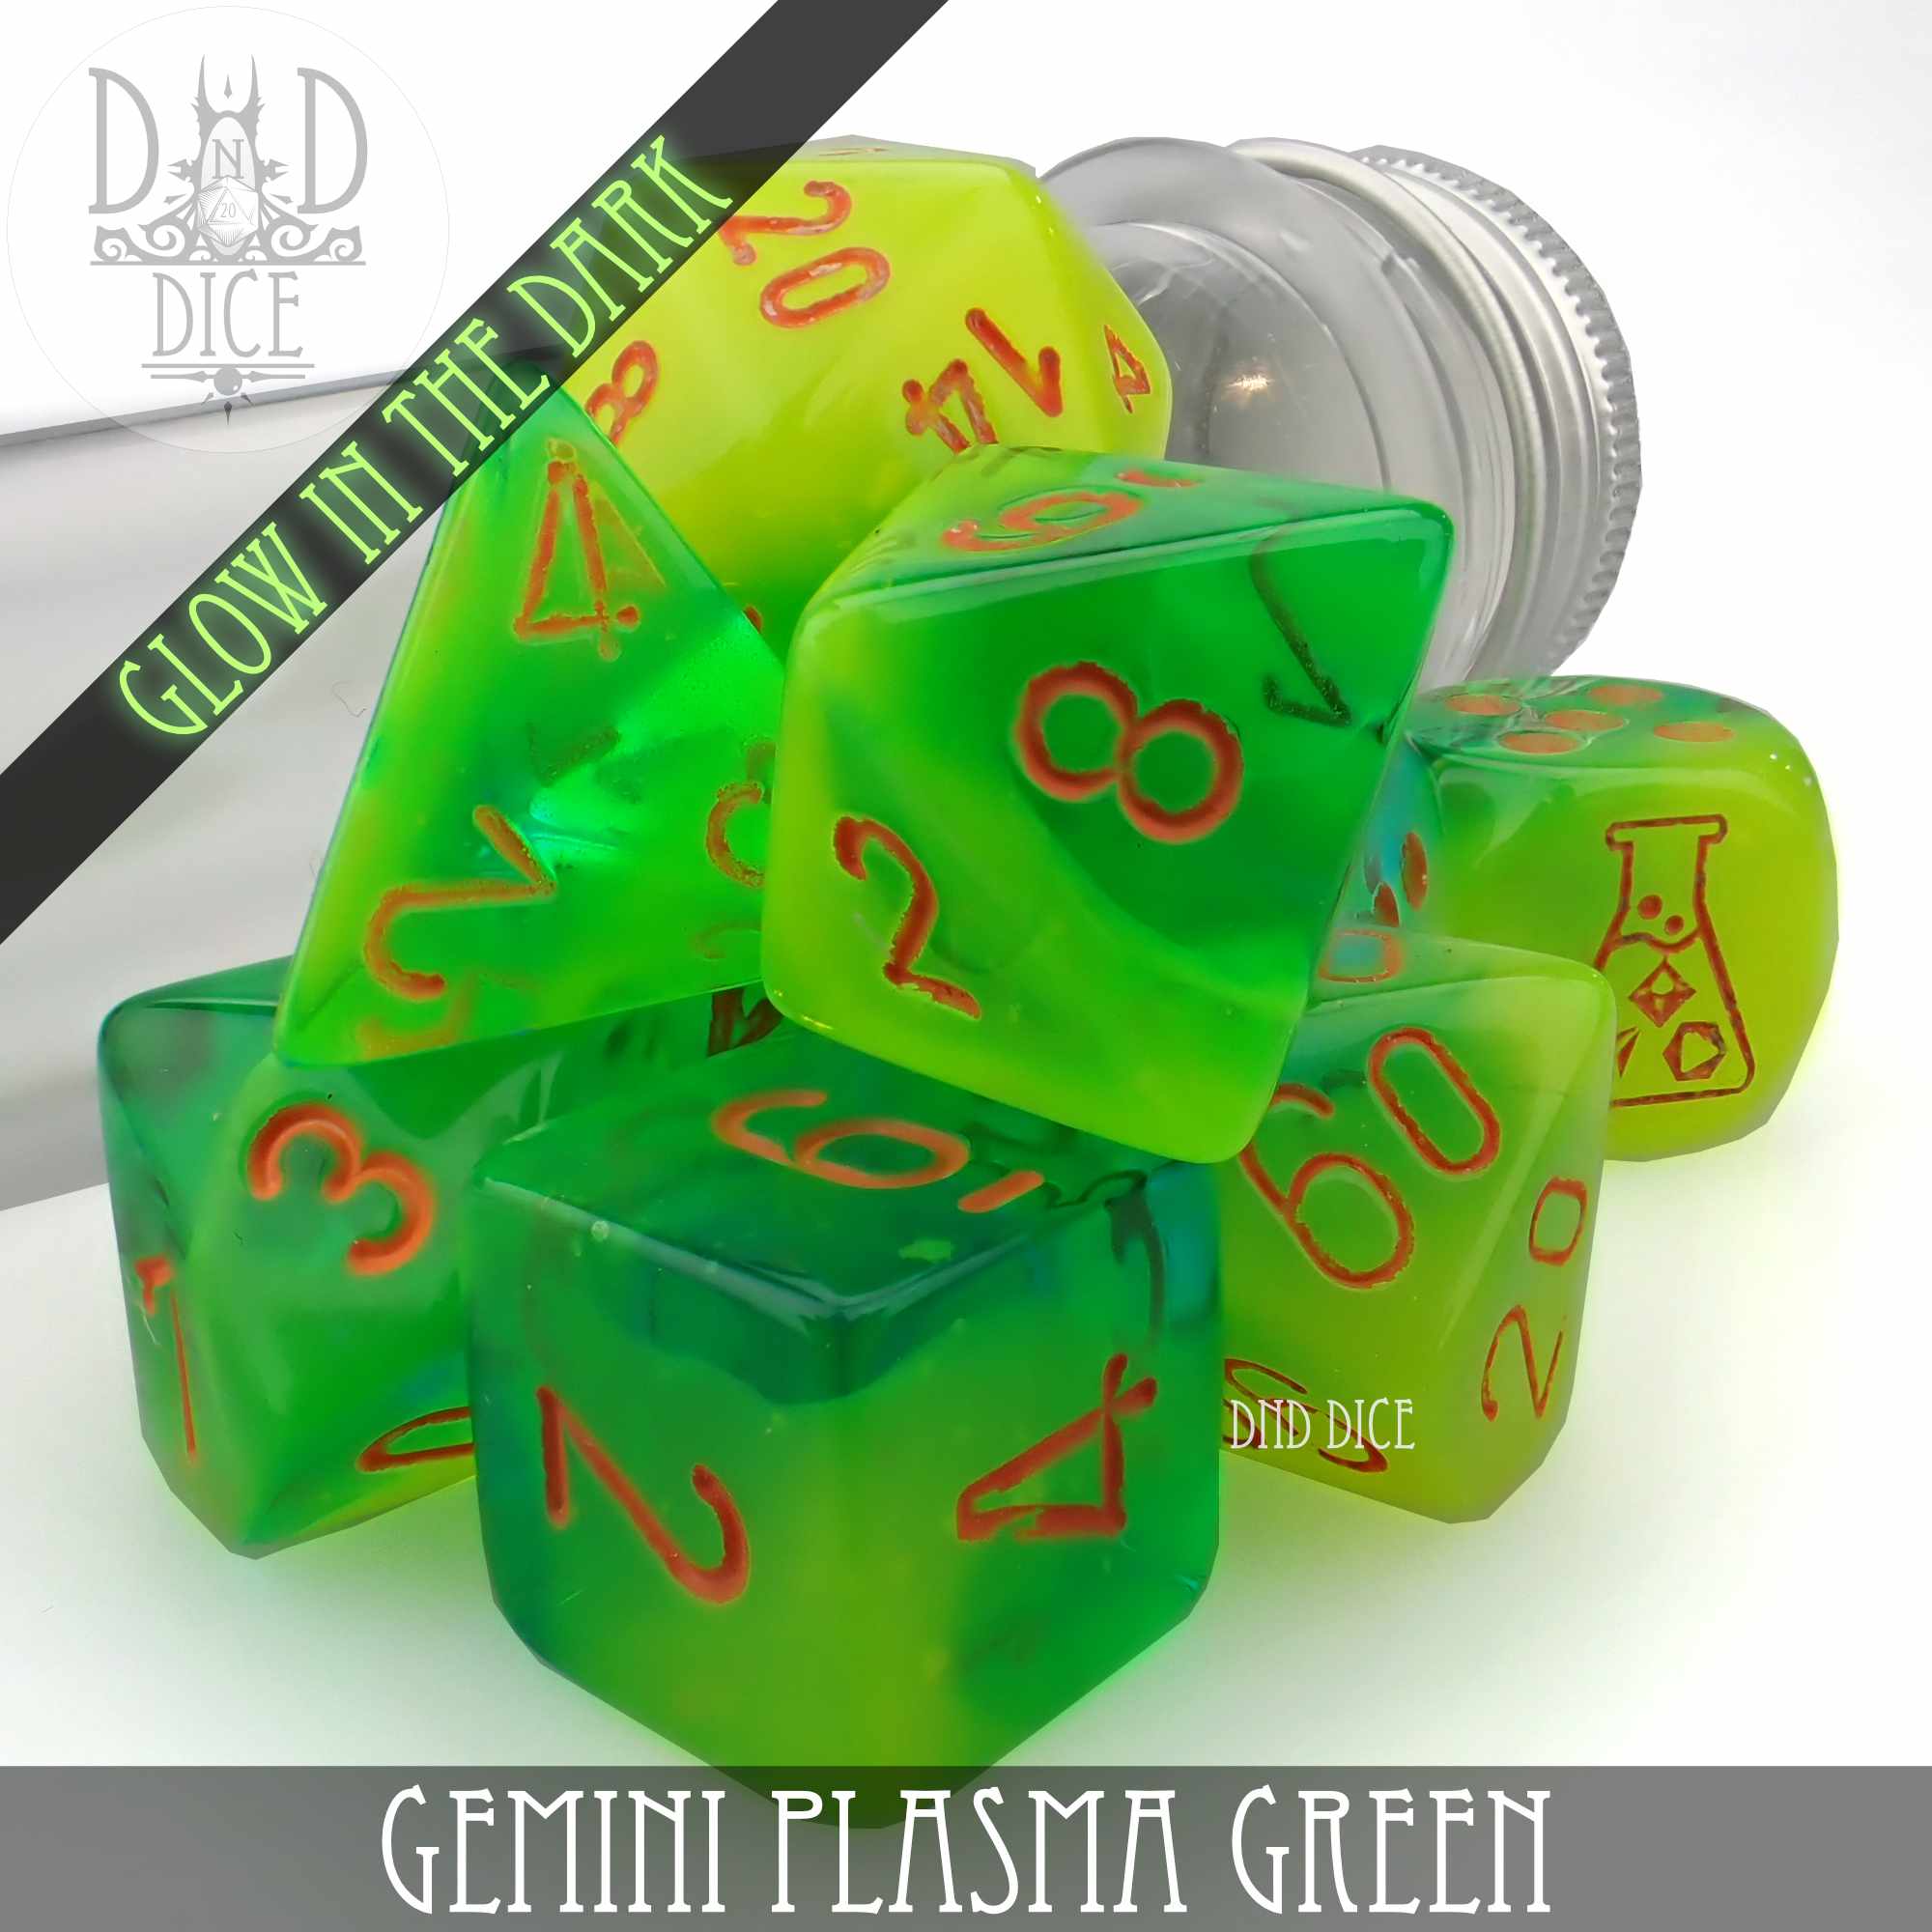 Gemini Plasma Green 8 Dice Set (Lab 5 Glow)